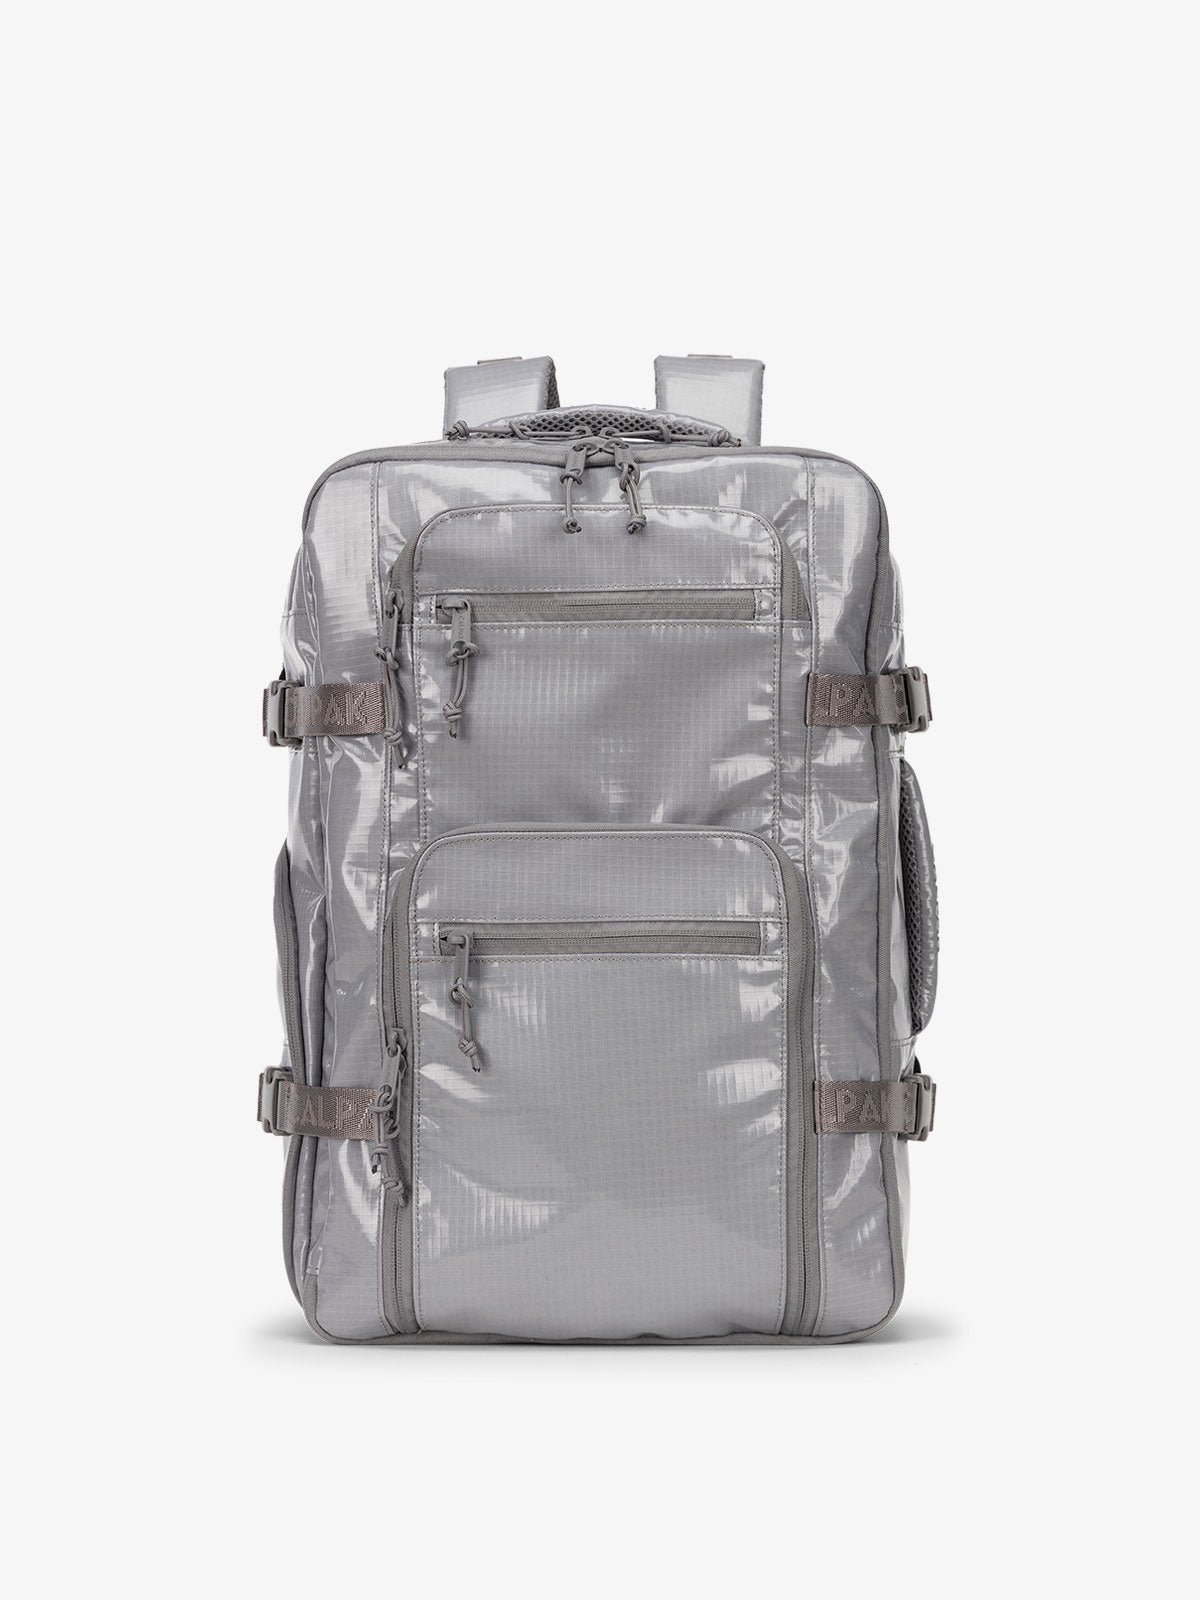 CALPAK Terra 26L laptop backpack duffel in gray